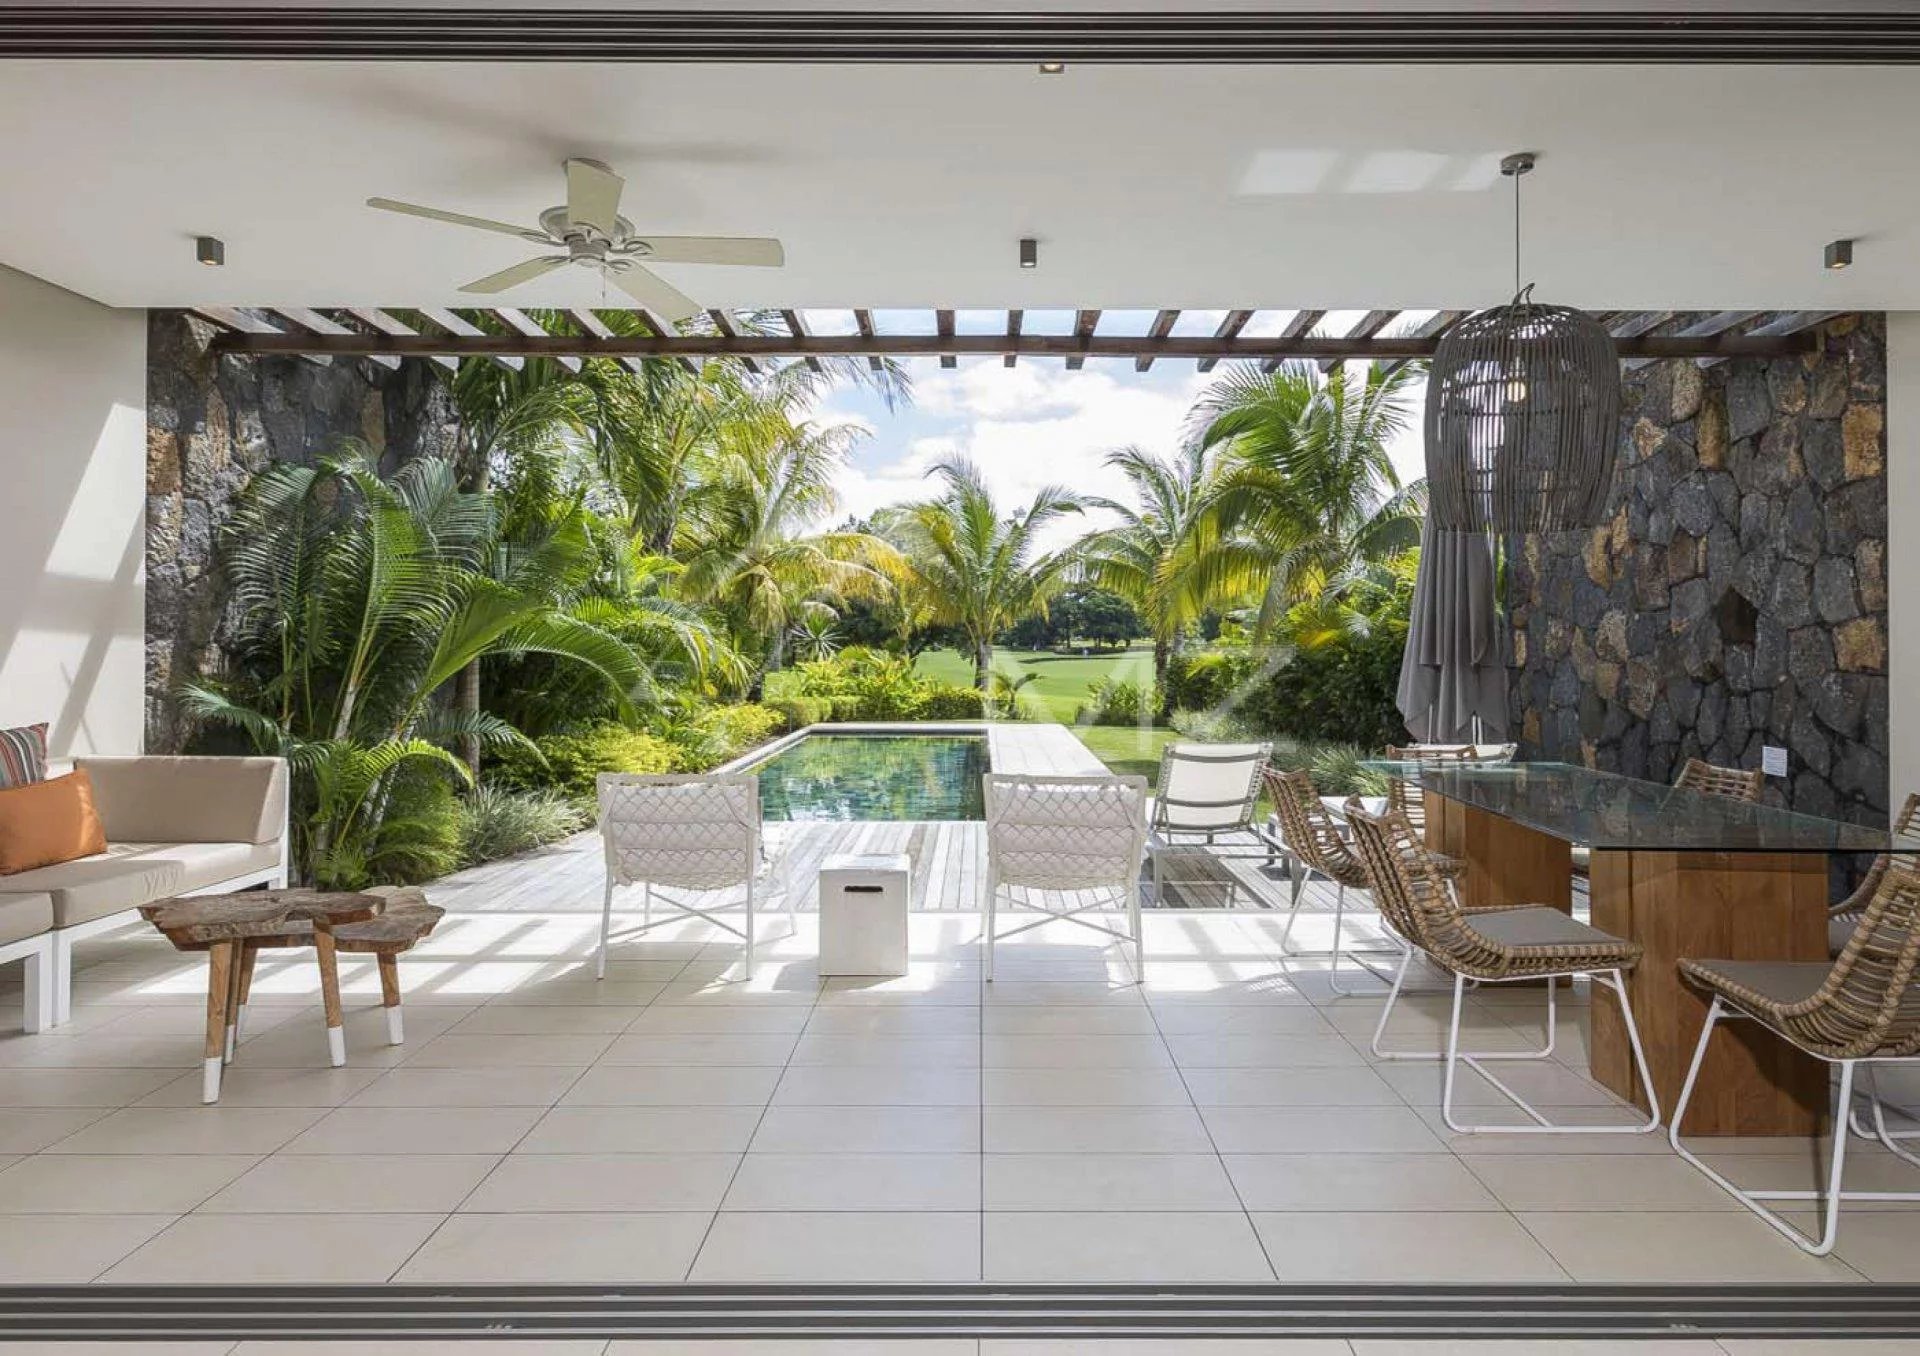 Mauritius - 3 bedroom duplex villa, beautiful unobstructed golf view